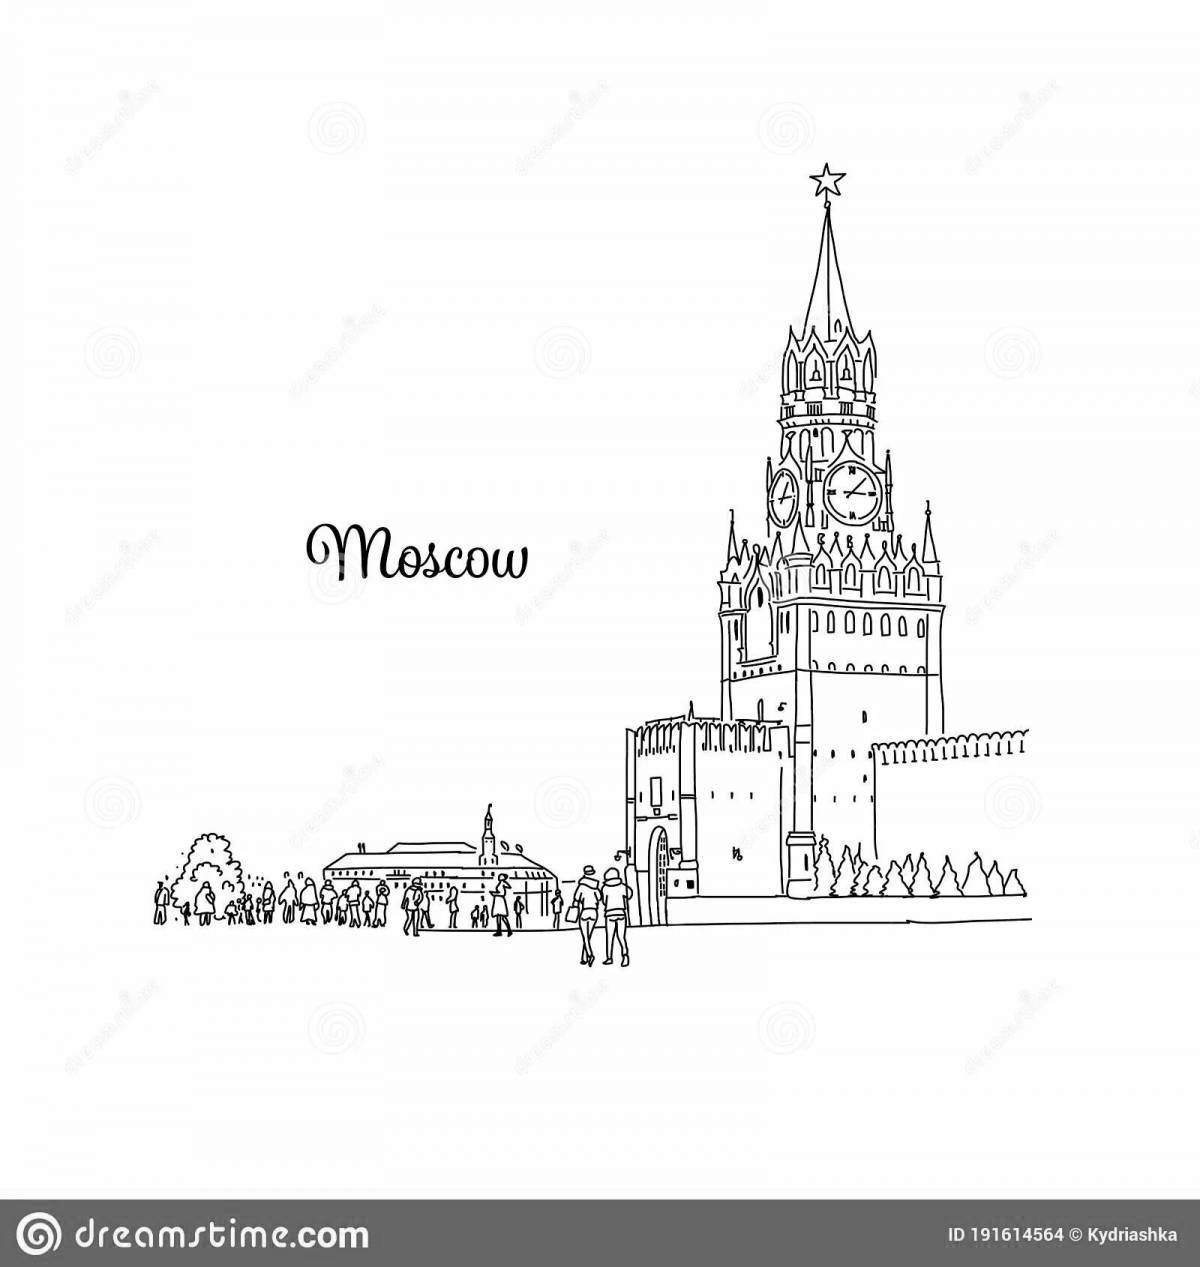 Кремль раскраска